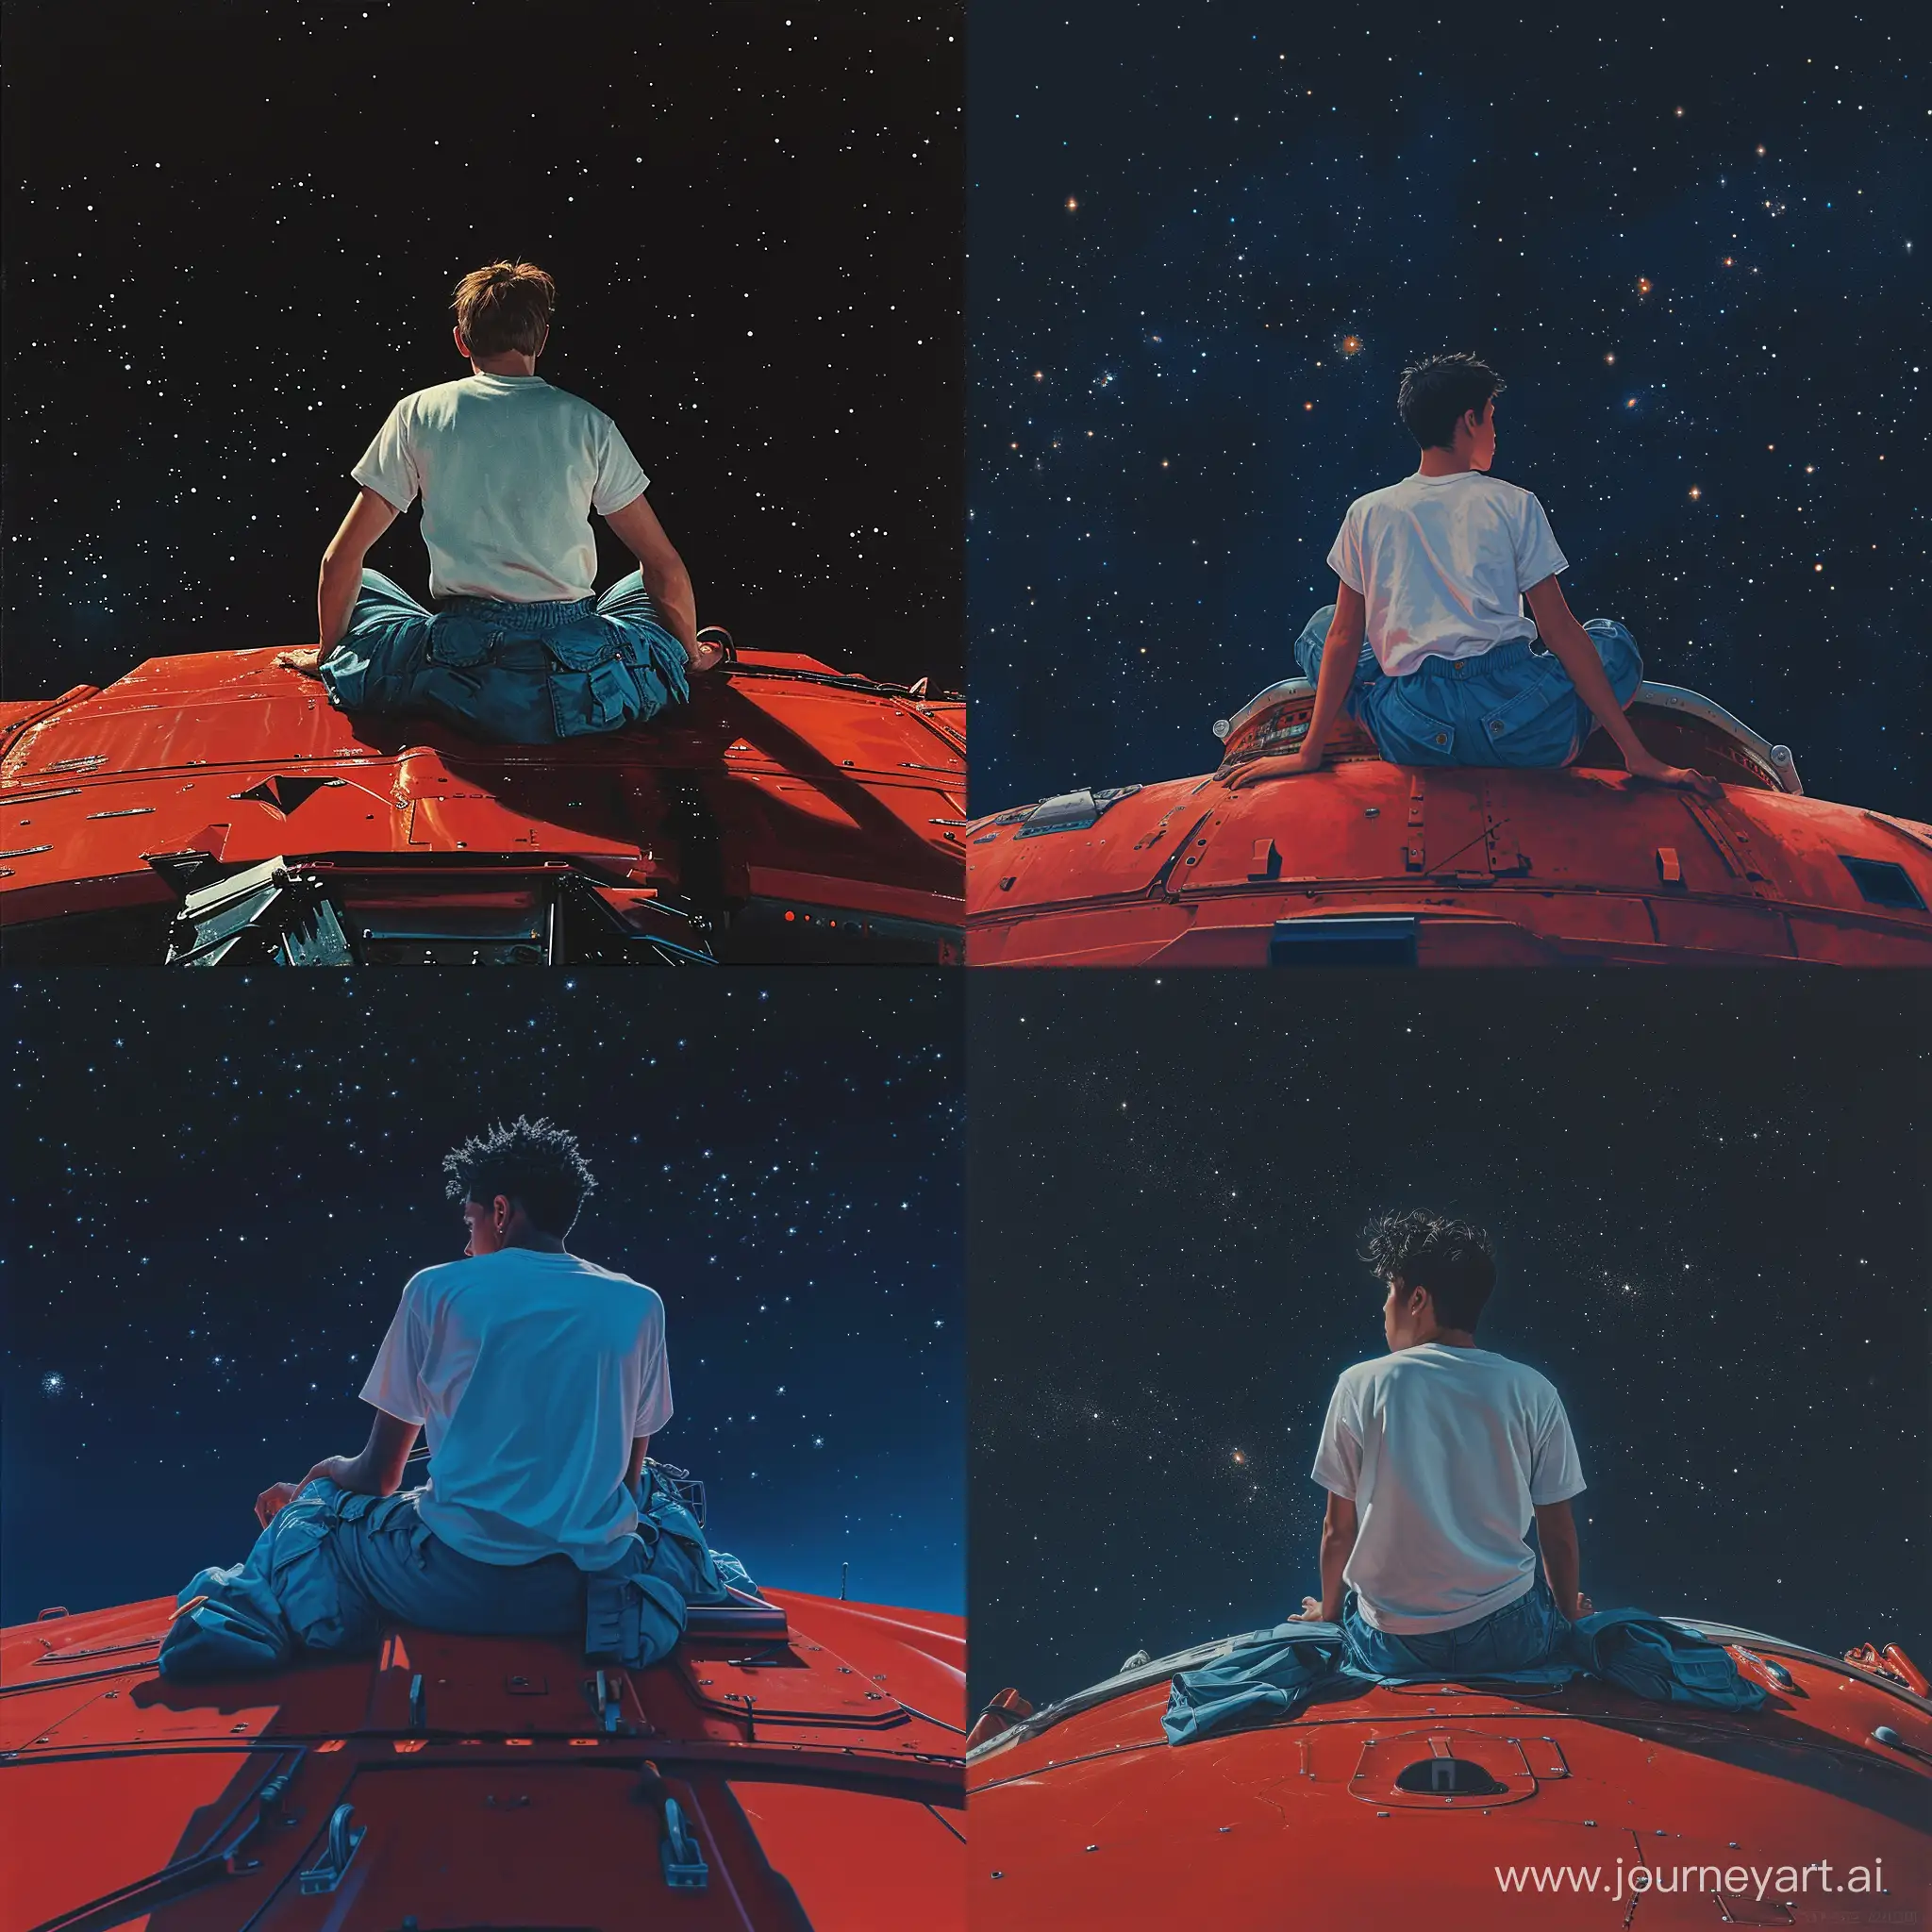 Contemplative-Astronaut-on-Futuristic-Red-Ship-Under-Starry-Night-Sky